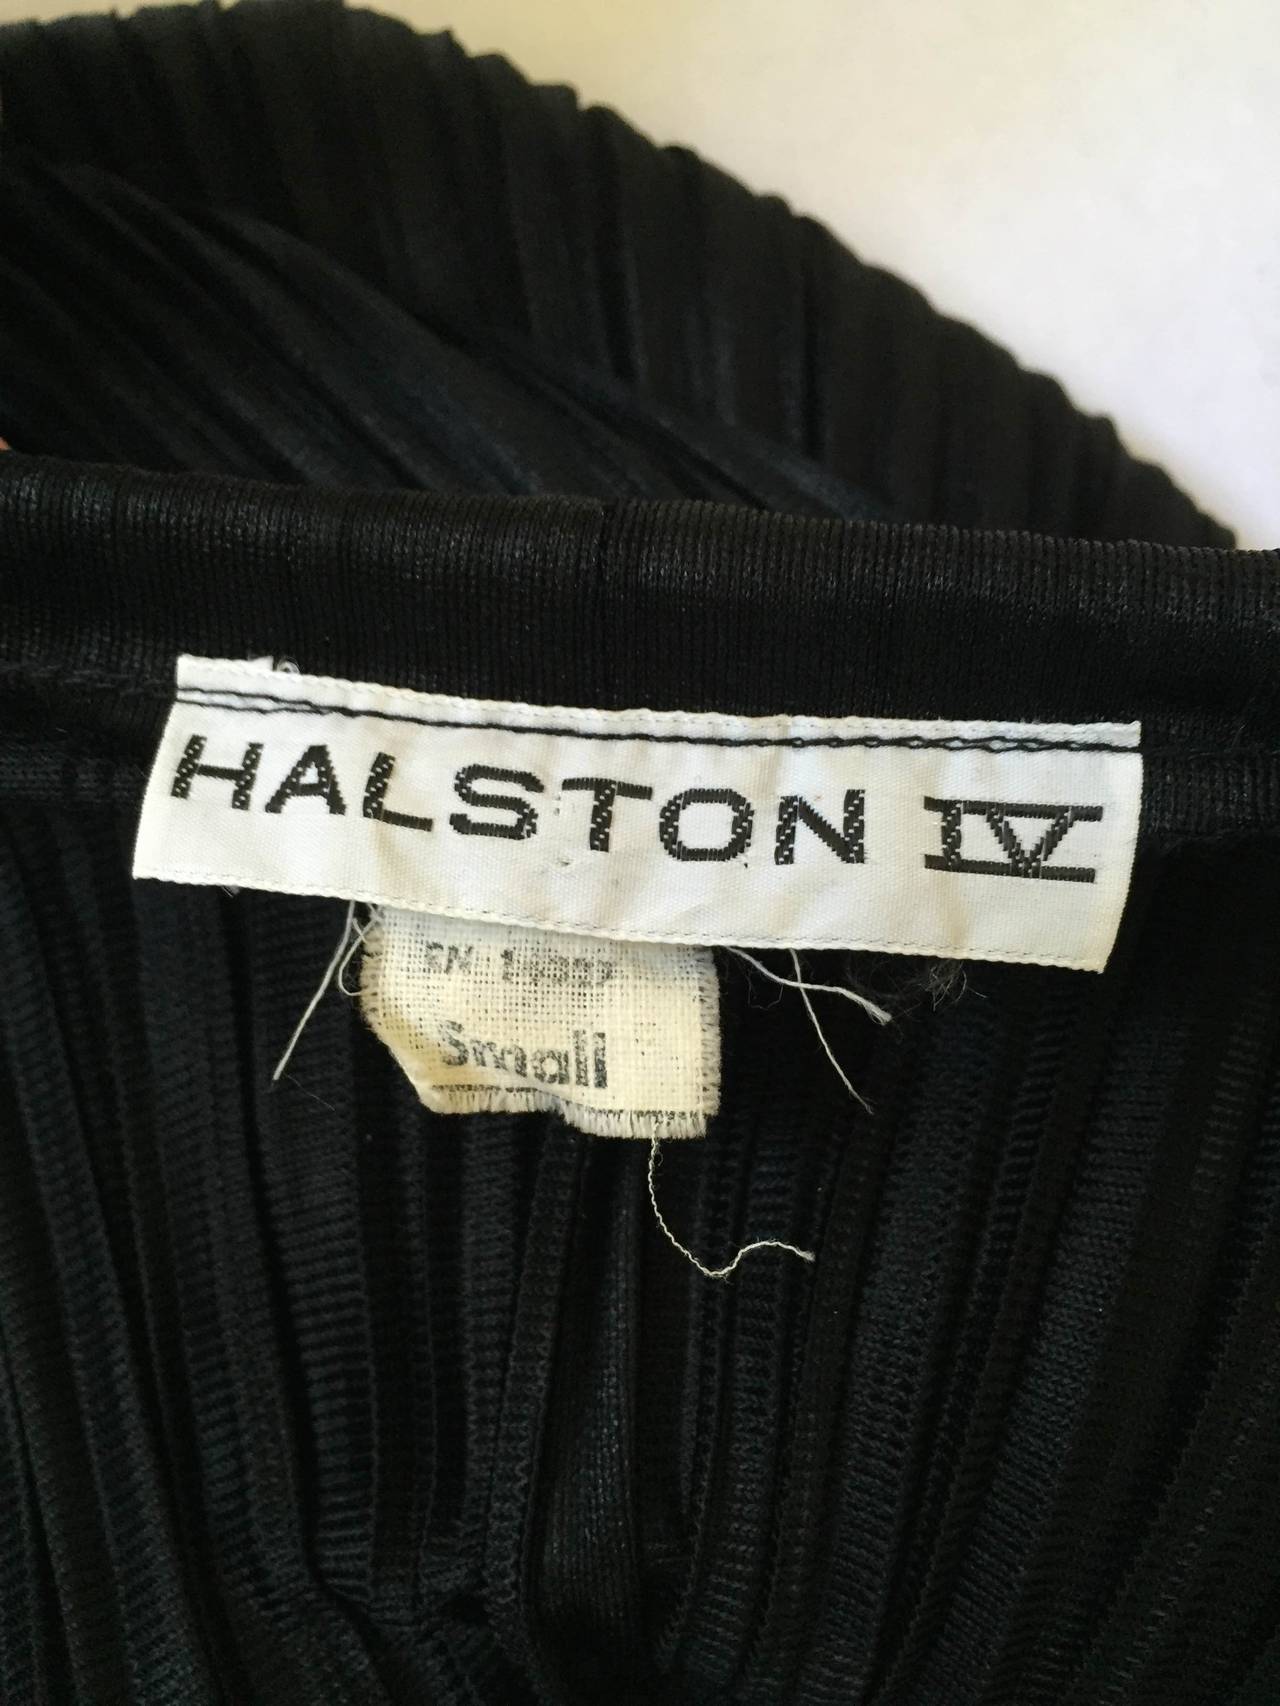 Halston IV 70s Dorian for Sak's black caftan / loungewear fits size 6. 1